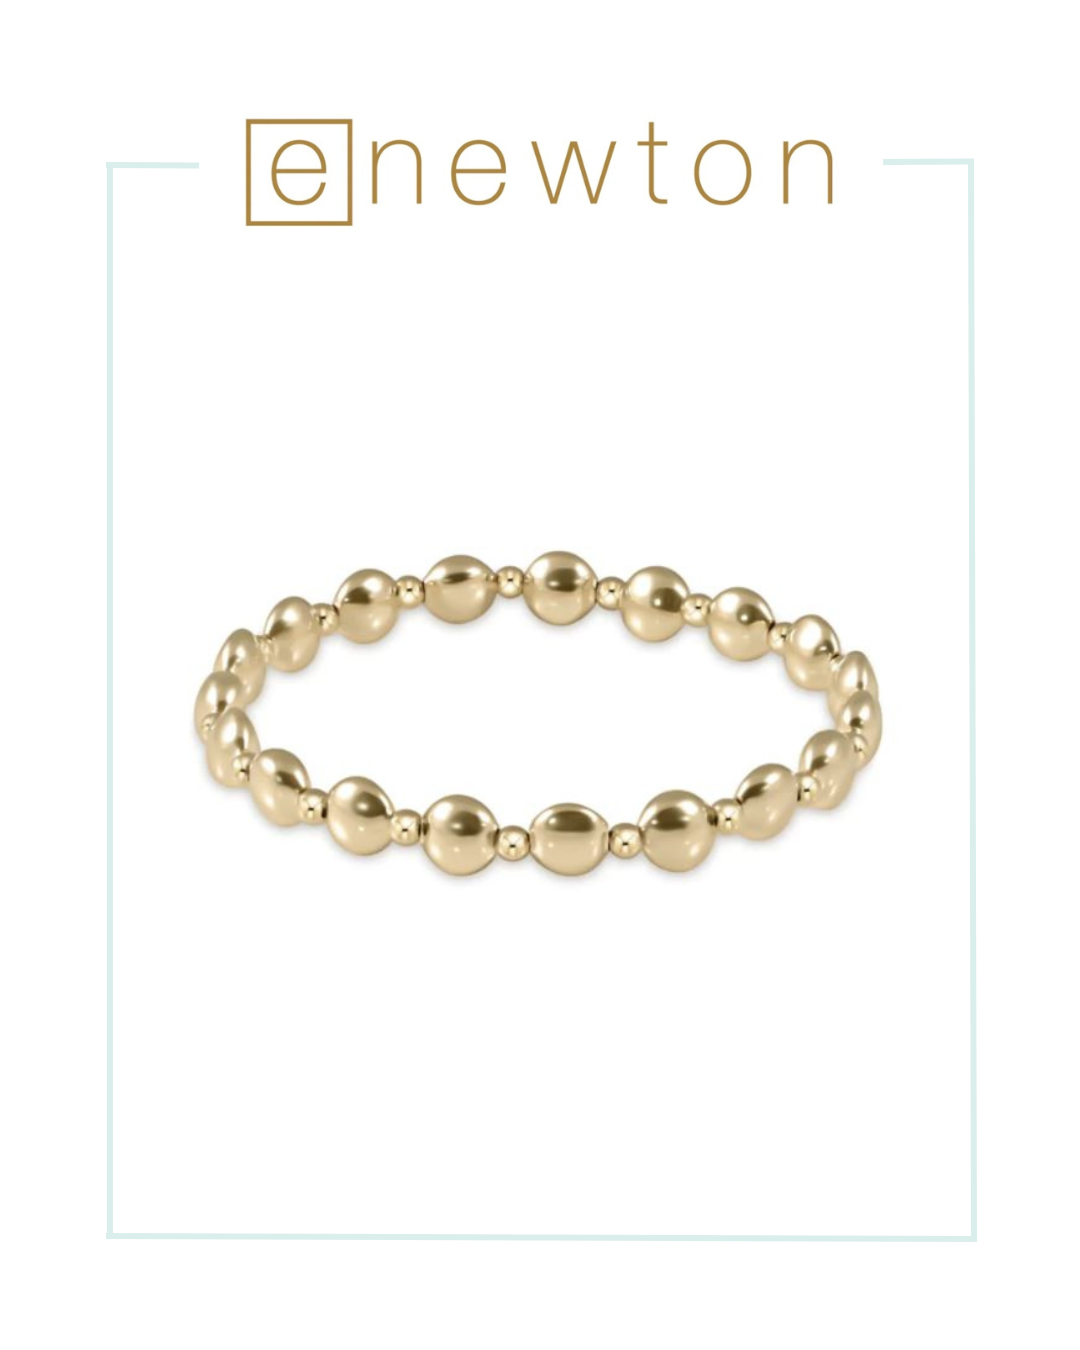 E Newton Honesty Gold Grateful Pattern 6mm Bead Bracelet - Gold-Bracelets-ENEWTON-The Village Shoppe, Women’s Fashion Boutique, Shop Online and In Store - Located in Muscle Shoals, AL.